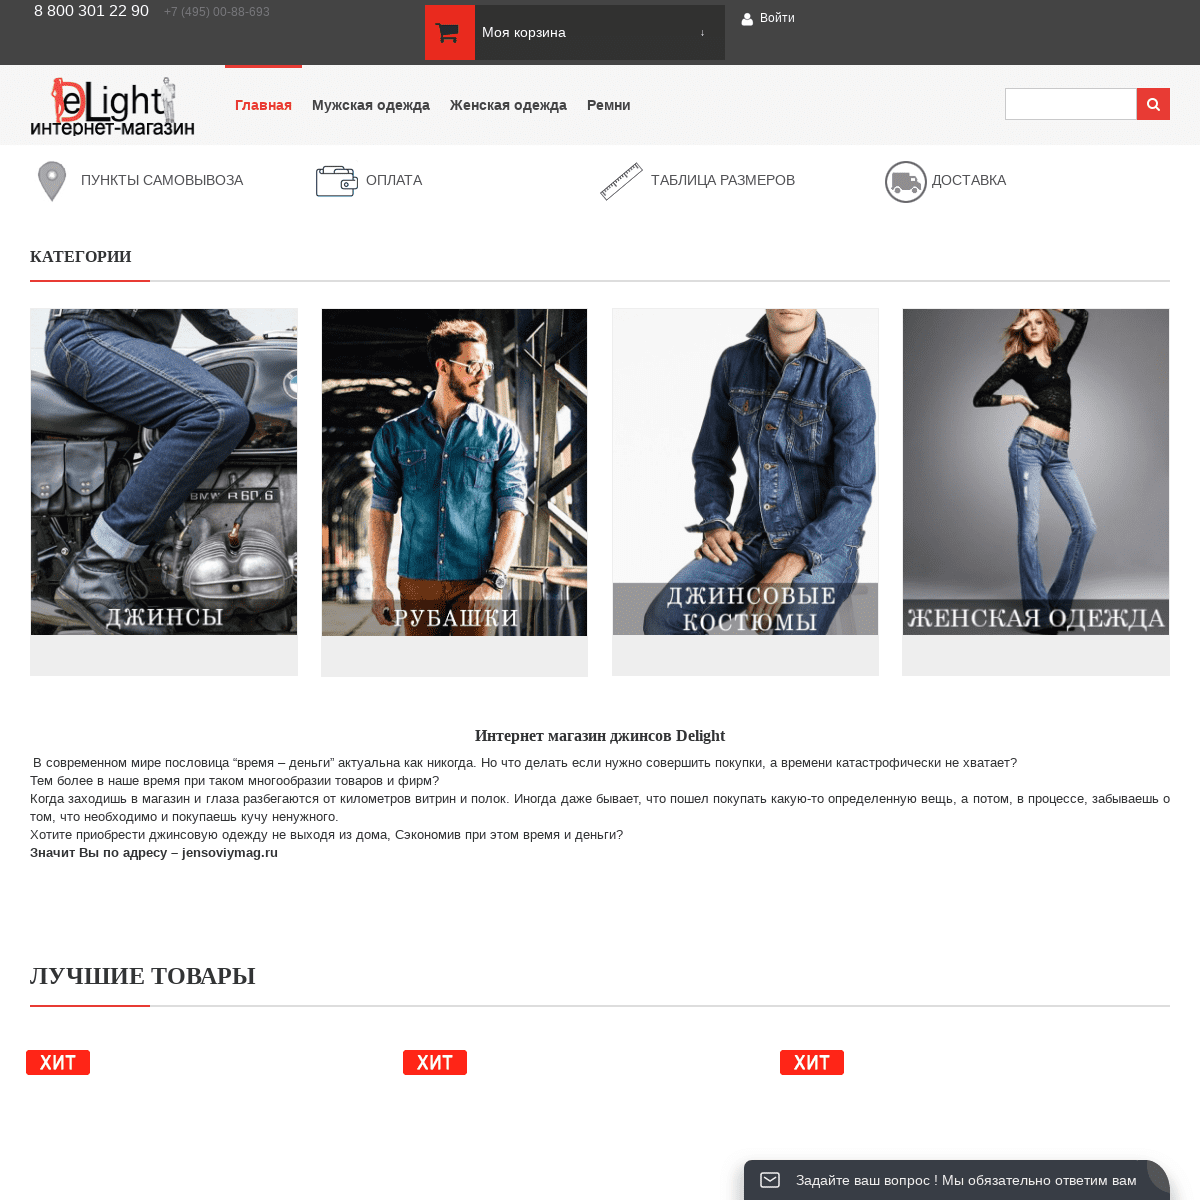 DeLight интернет-магазин одежды